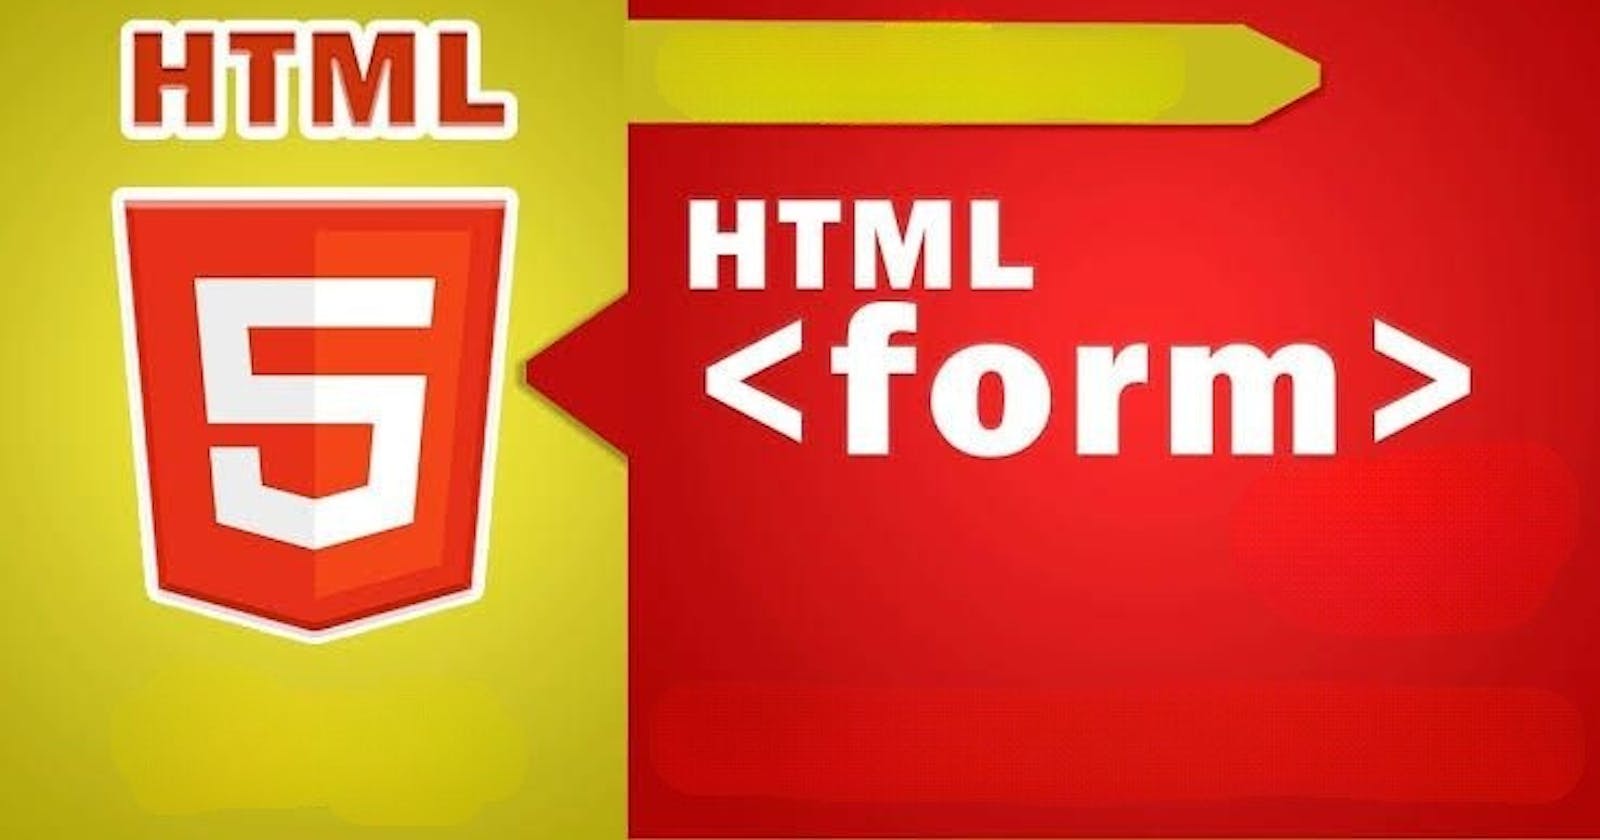 HTML "Form"